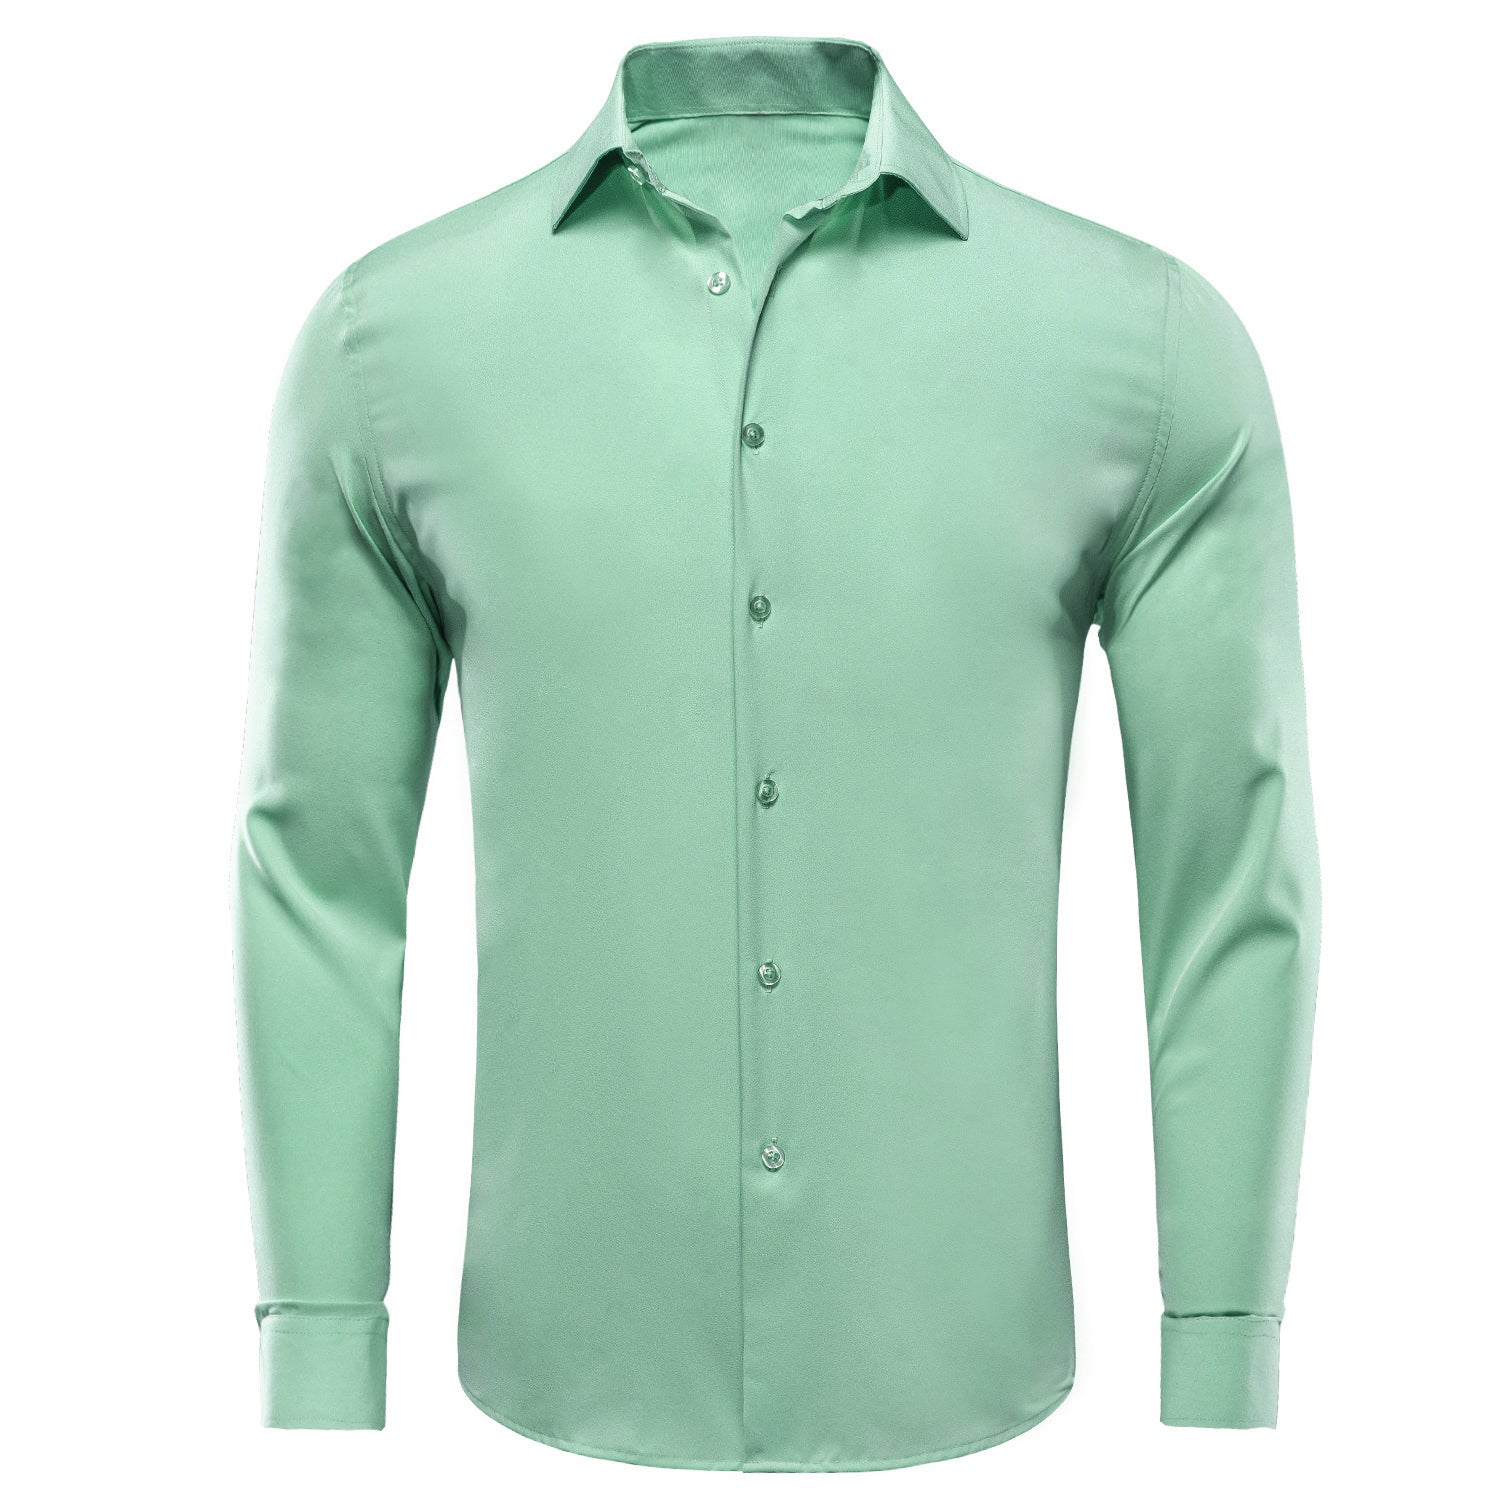 New Mint Green Solid Stretch Men's Long Sleeve Shirt